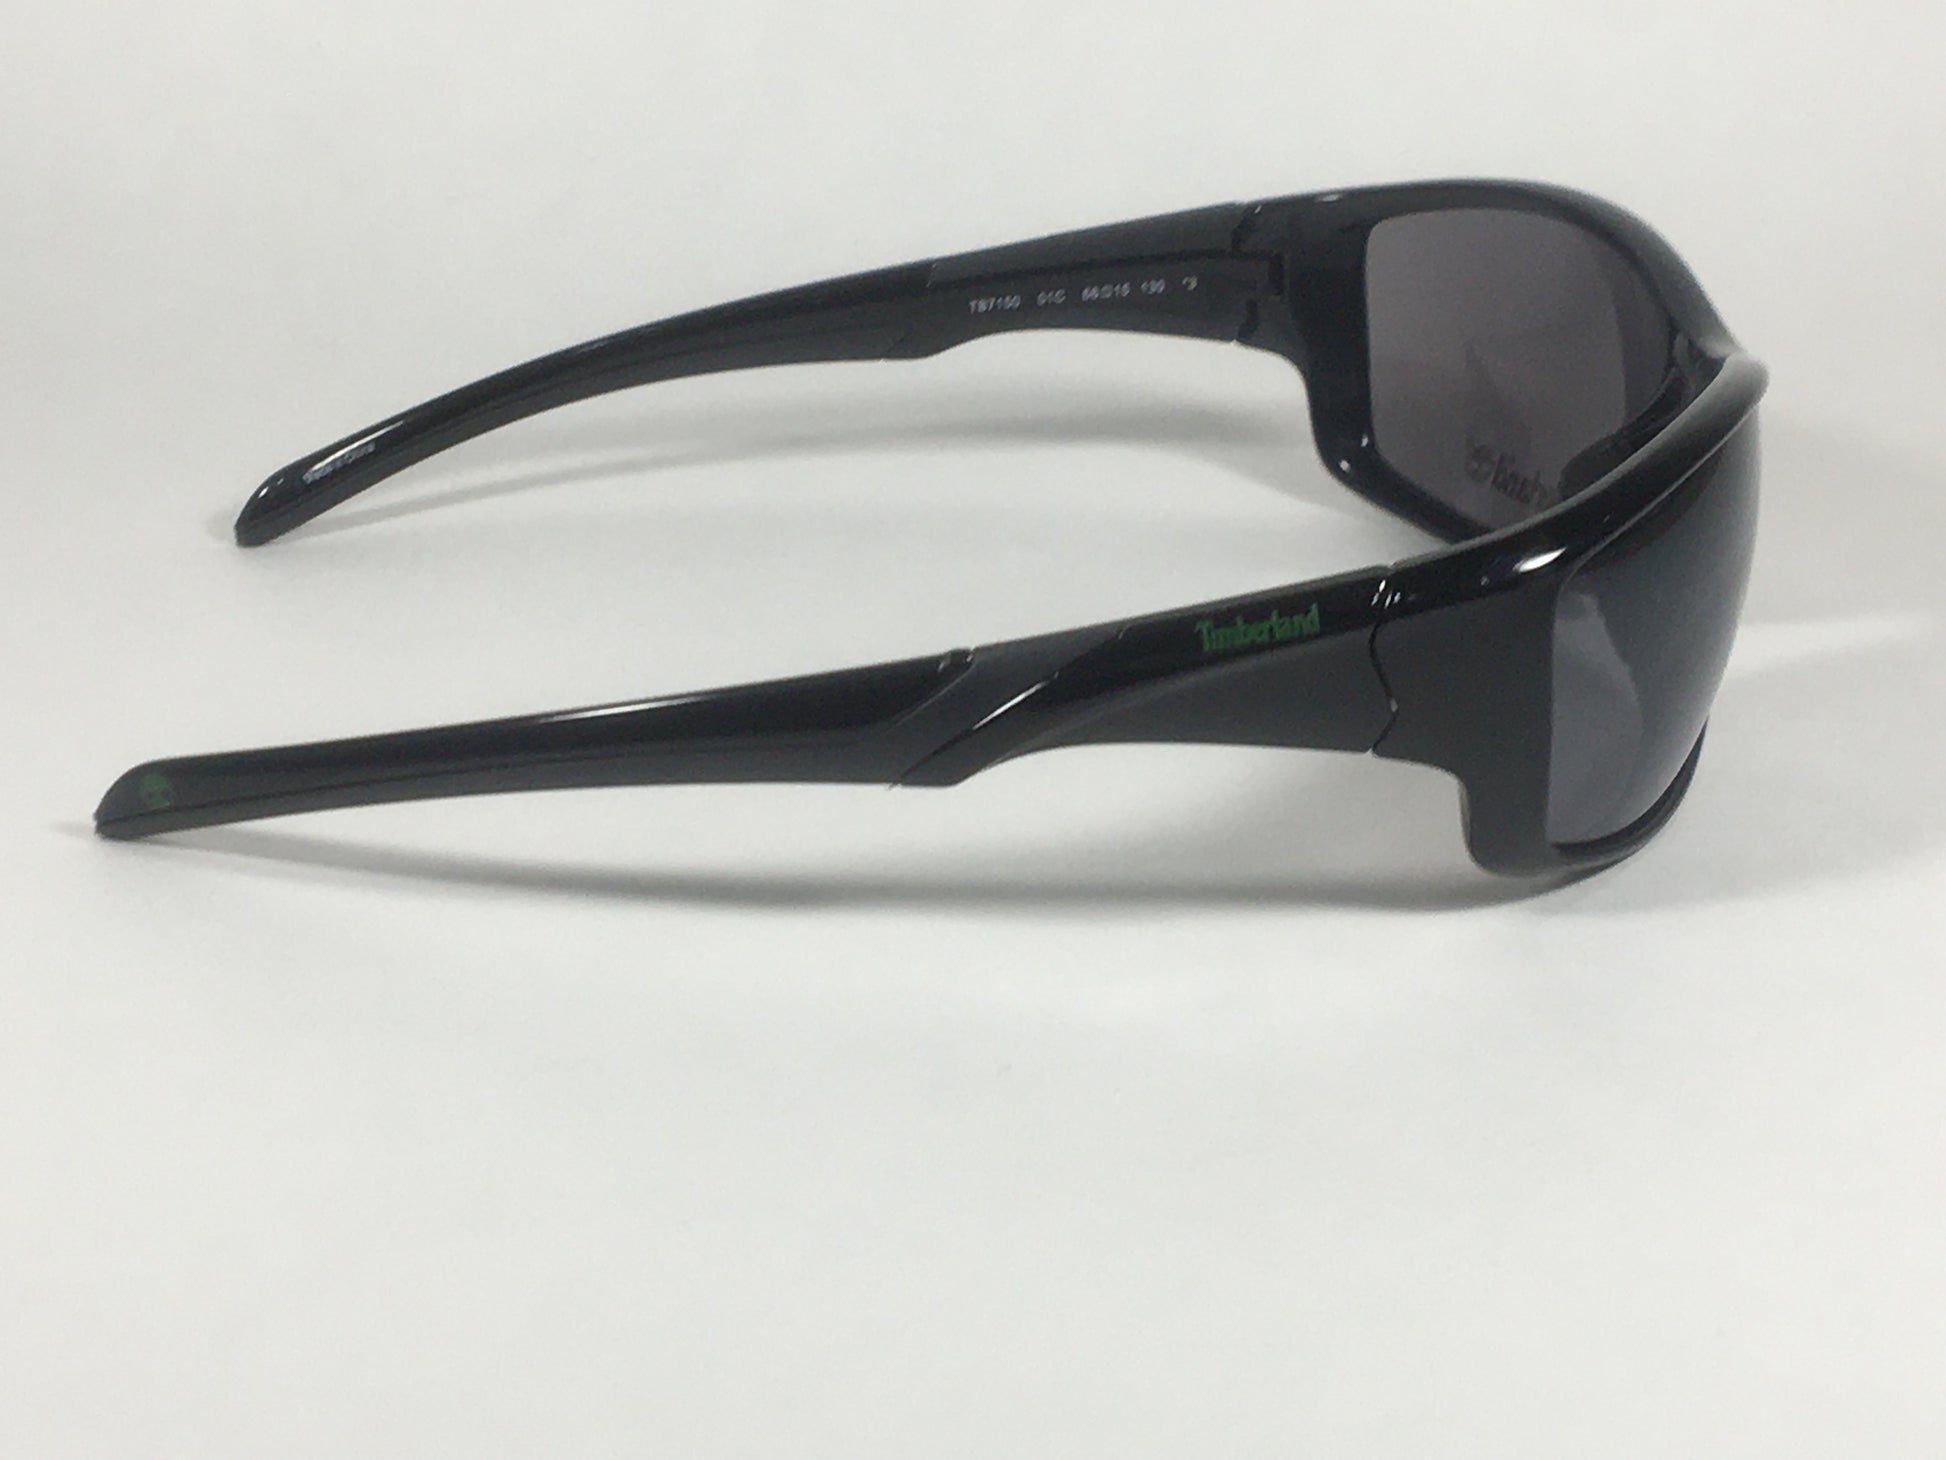 Timberland Sport Wrap Sunglasses Shiny Black Frame Gray Lens TB7150 01C - Sunglasses